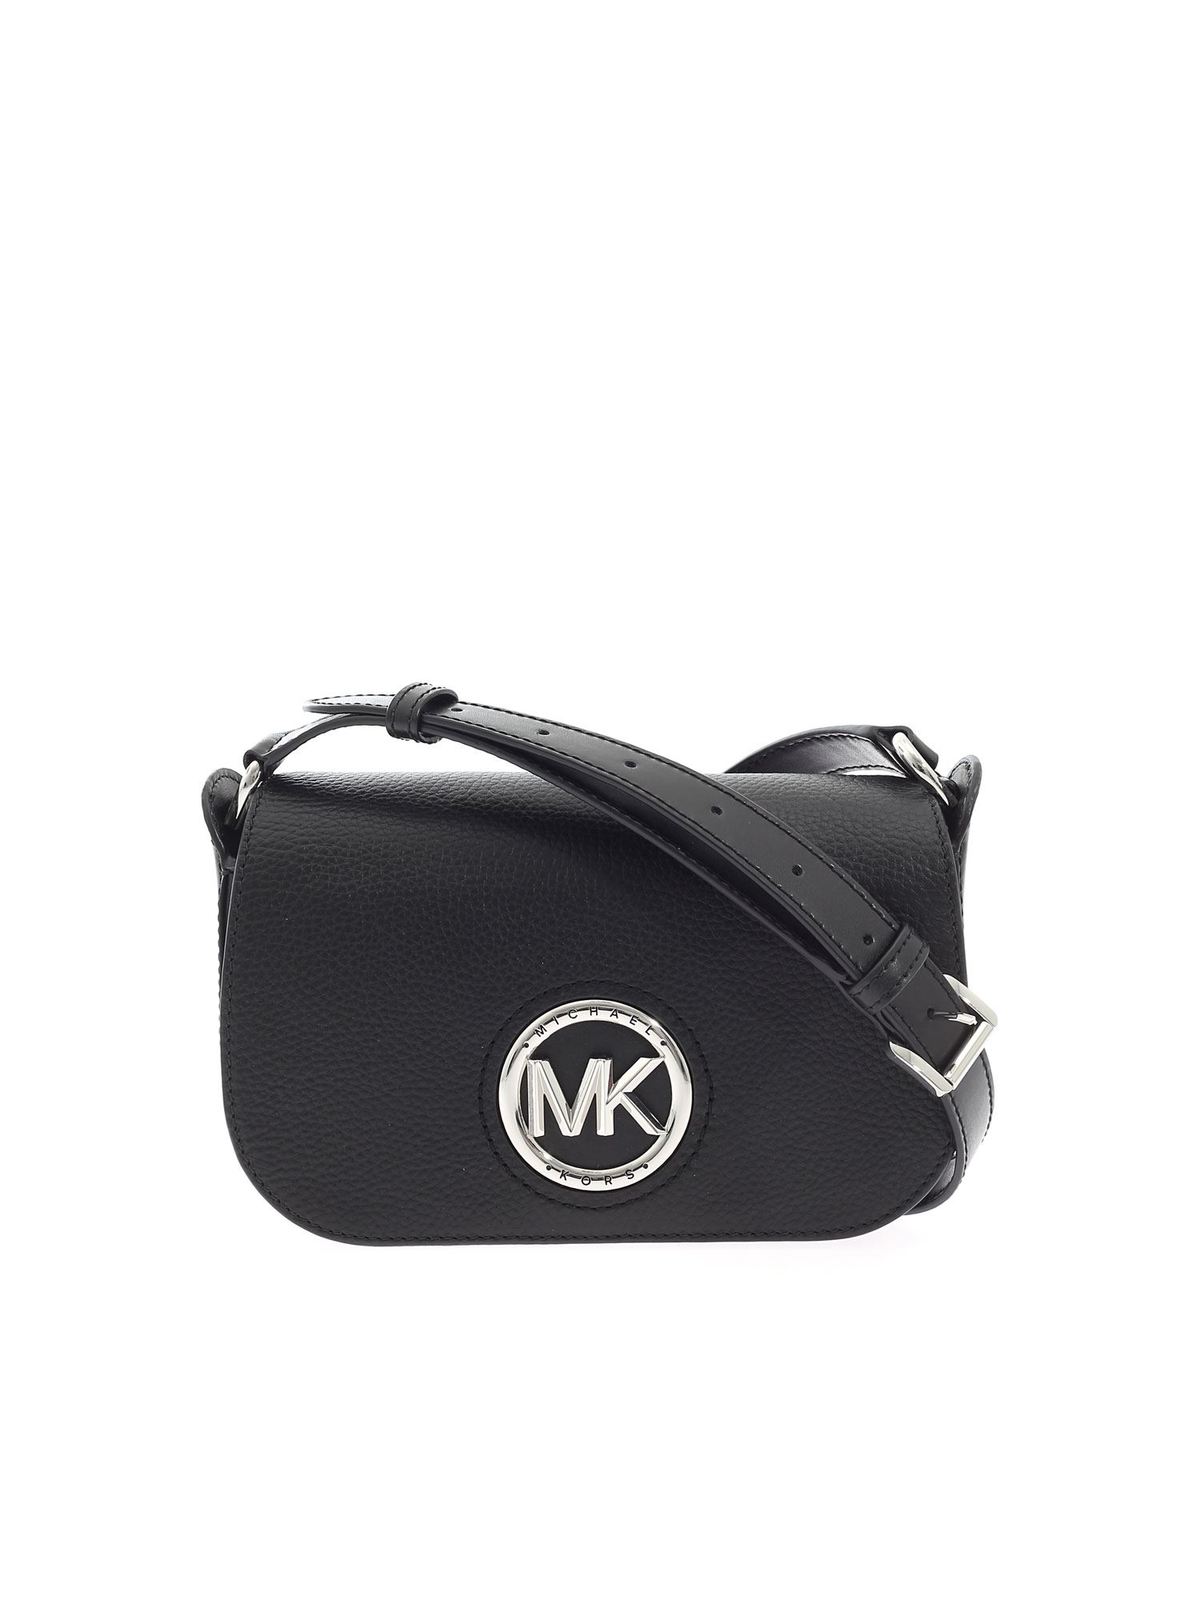 Cross body bags Michael Kors - MK logo bag in black - 30T0S1MM1LBLACK